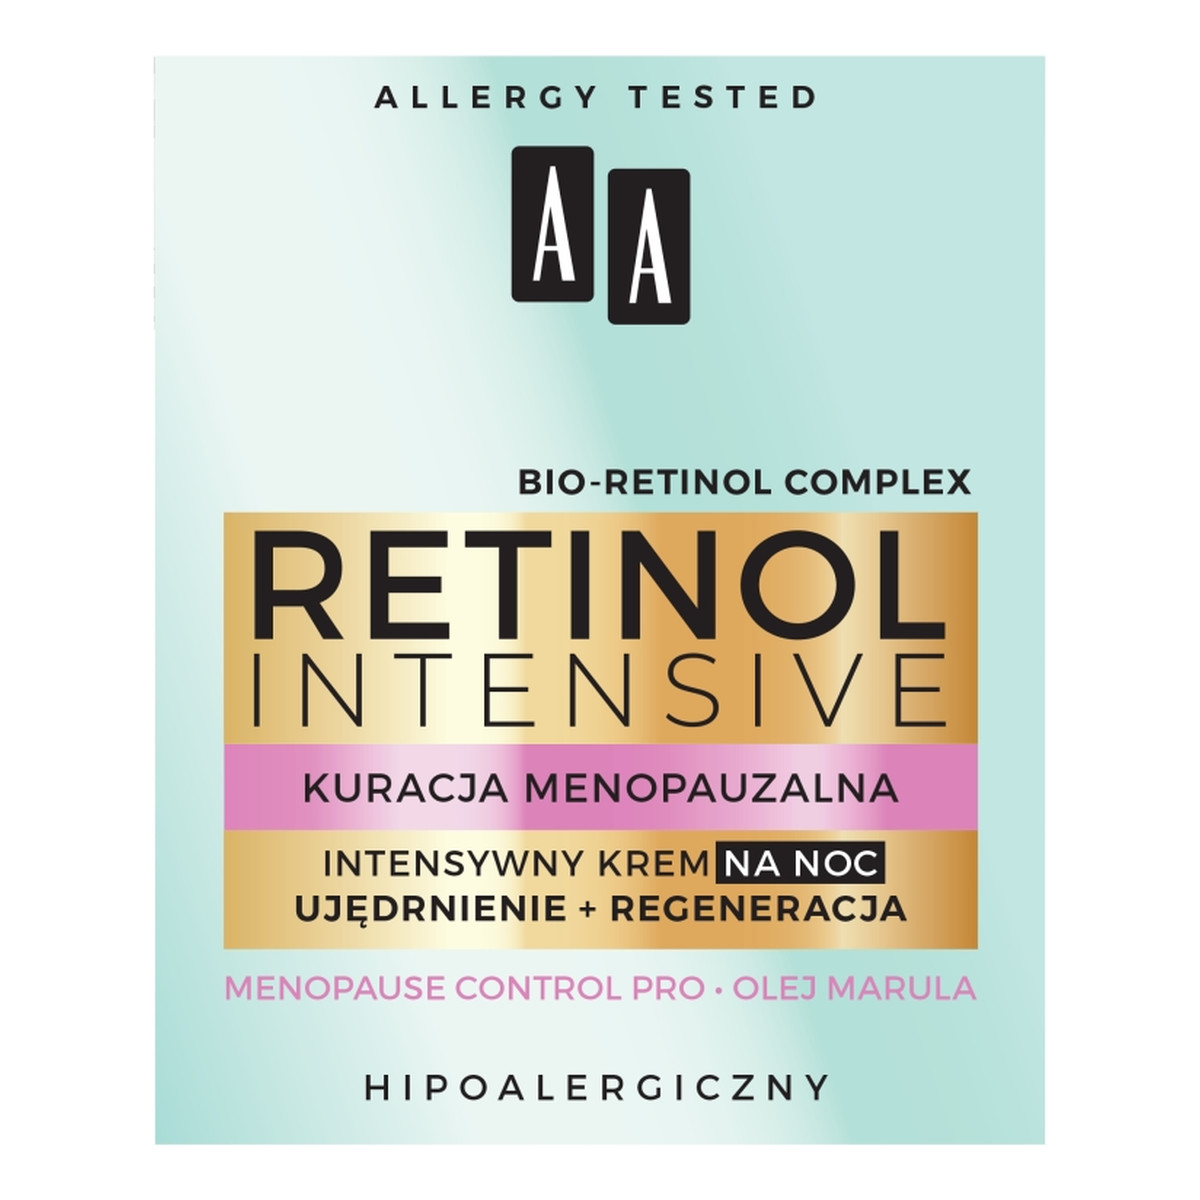 AA Retinol Intensive Kuracja Menopauzalna Krem intensywny na noc ujędrnienie+ regeneracja 50ml